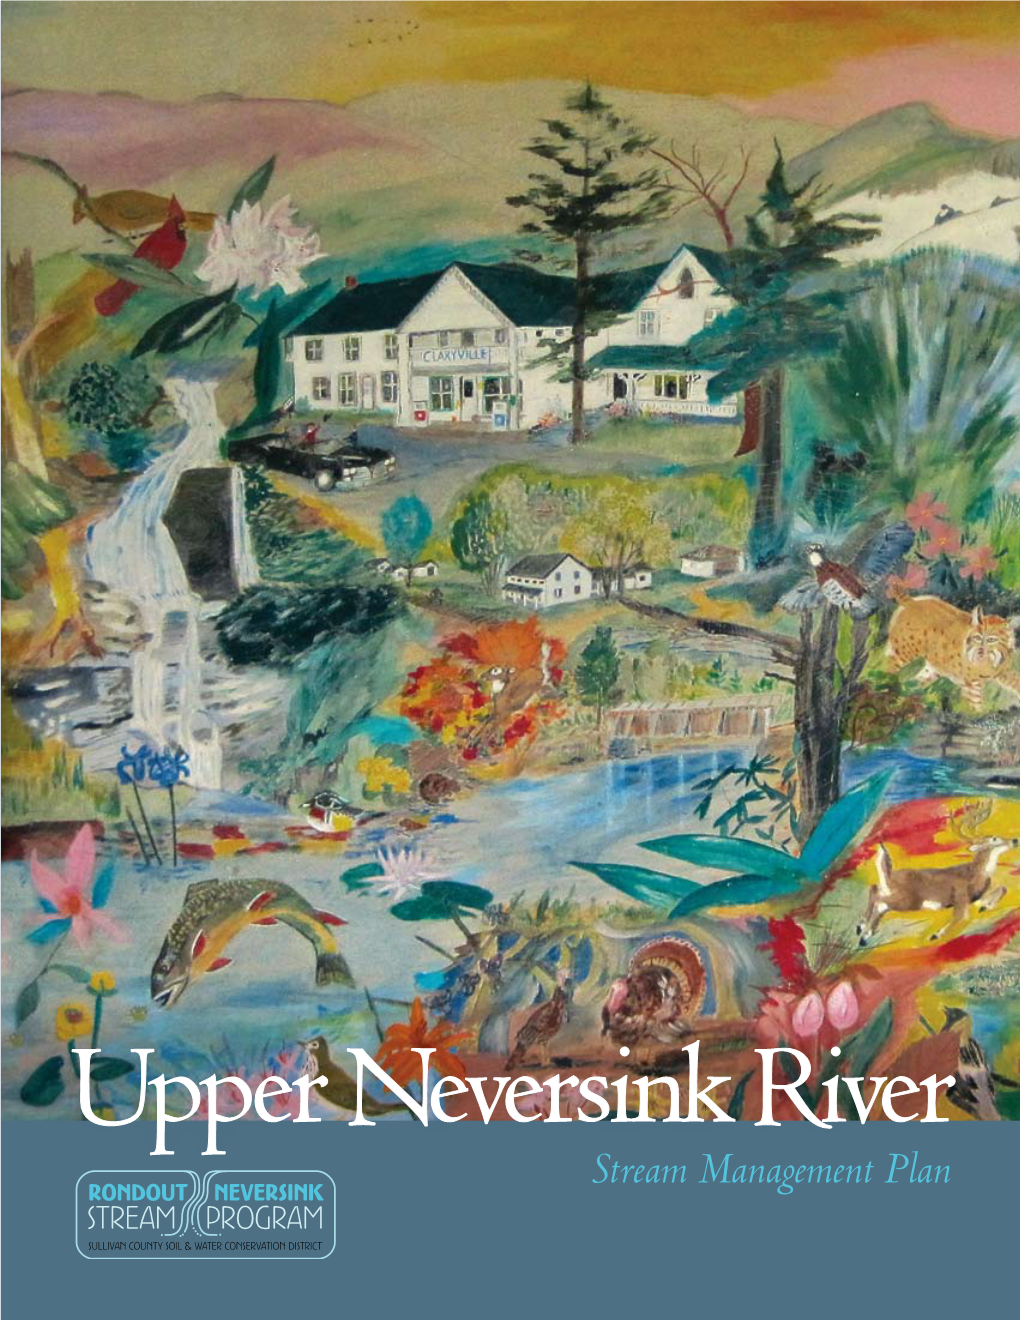 Upper Neversink River Stream Management Plan, 2013